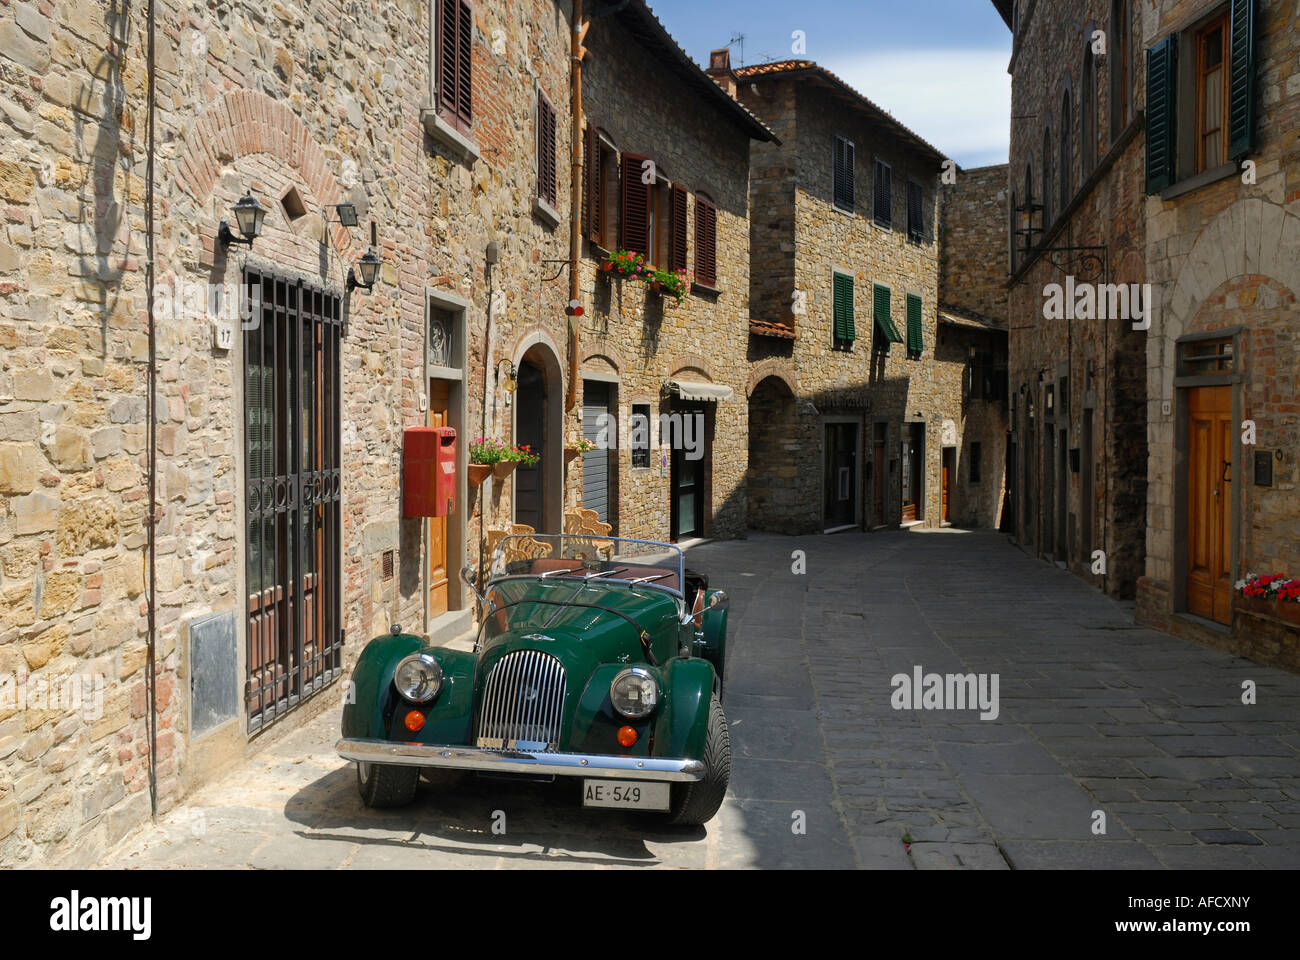 Morgan voiture dans la rue vide de la ville médiévale de San Donato in Poggio toscane italie Banque D'Images